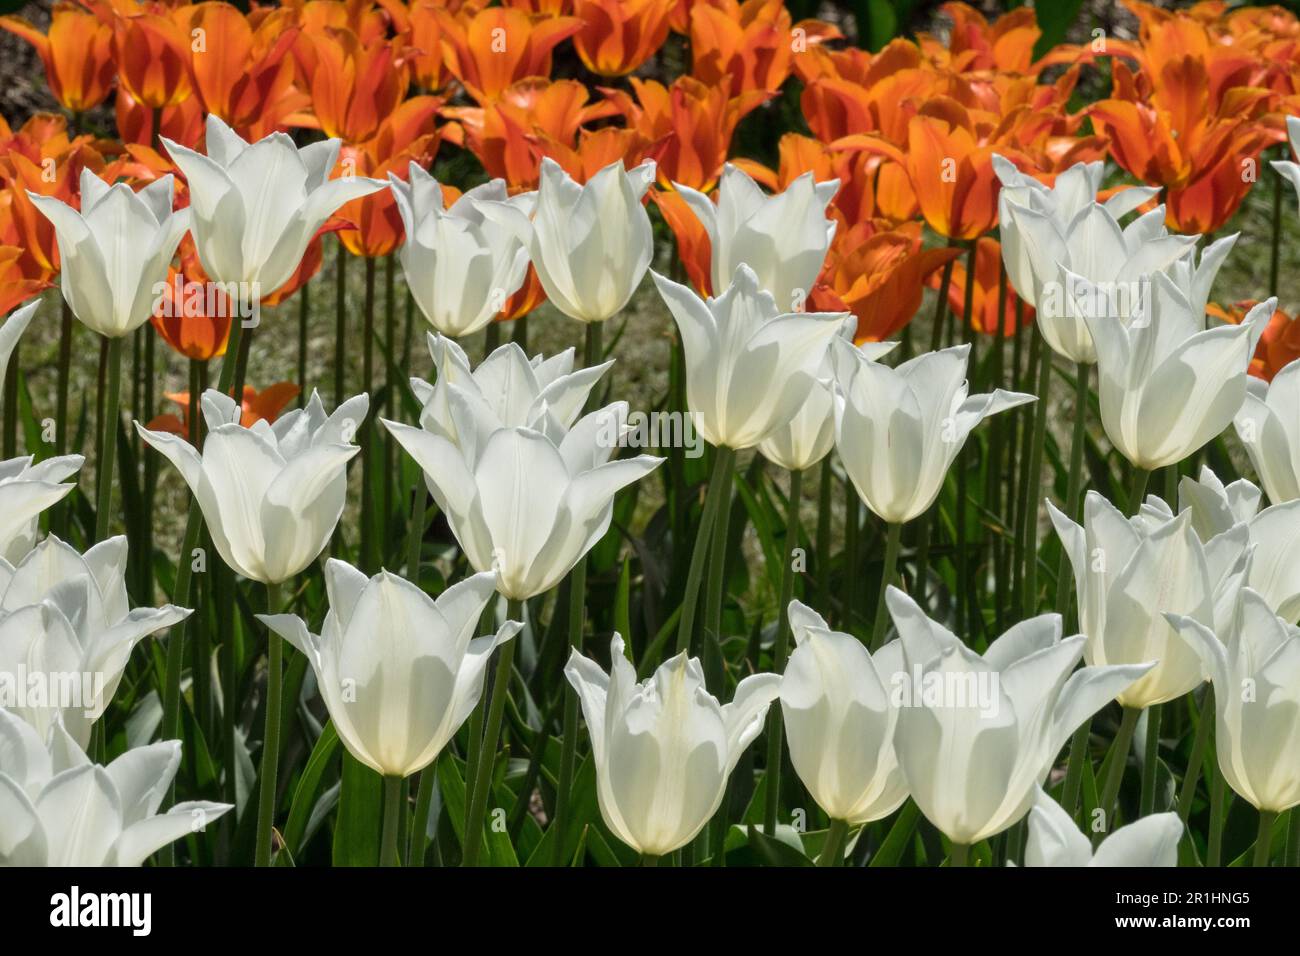 Tulips, White Orange, Tulip 'White Triumphator', Tulip 'Ballerina' background Stock Photo